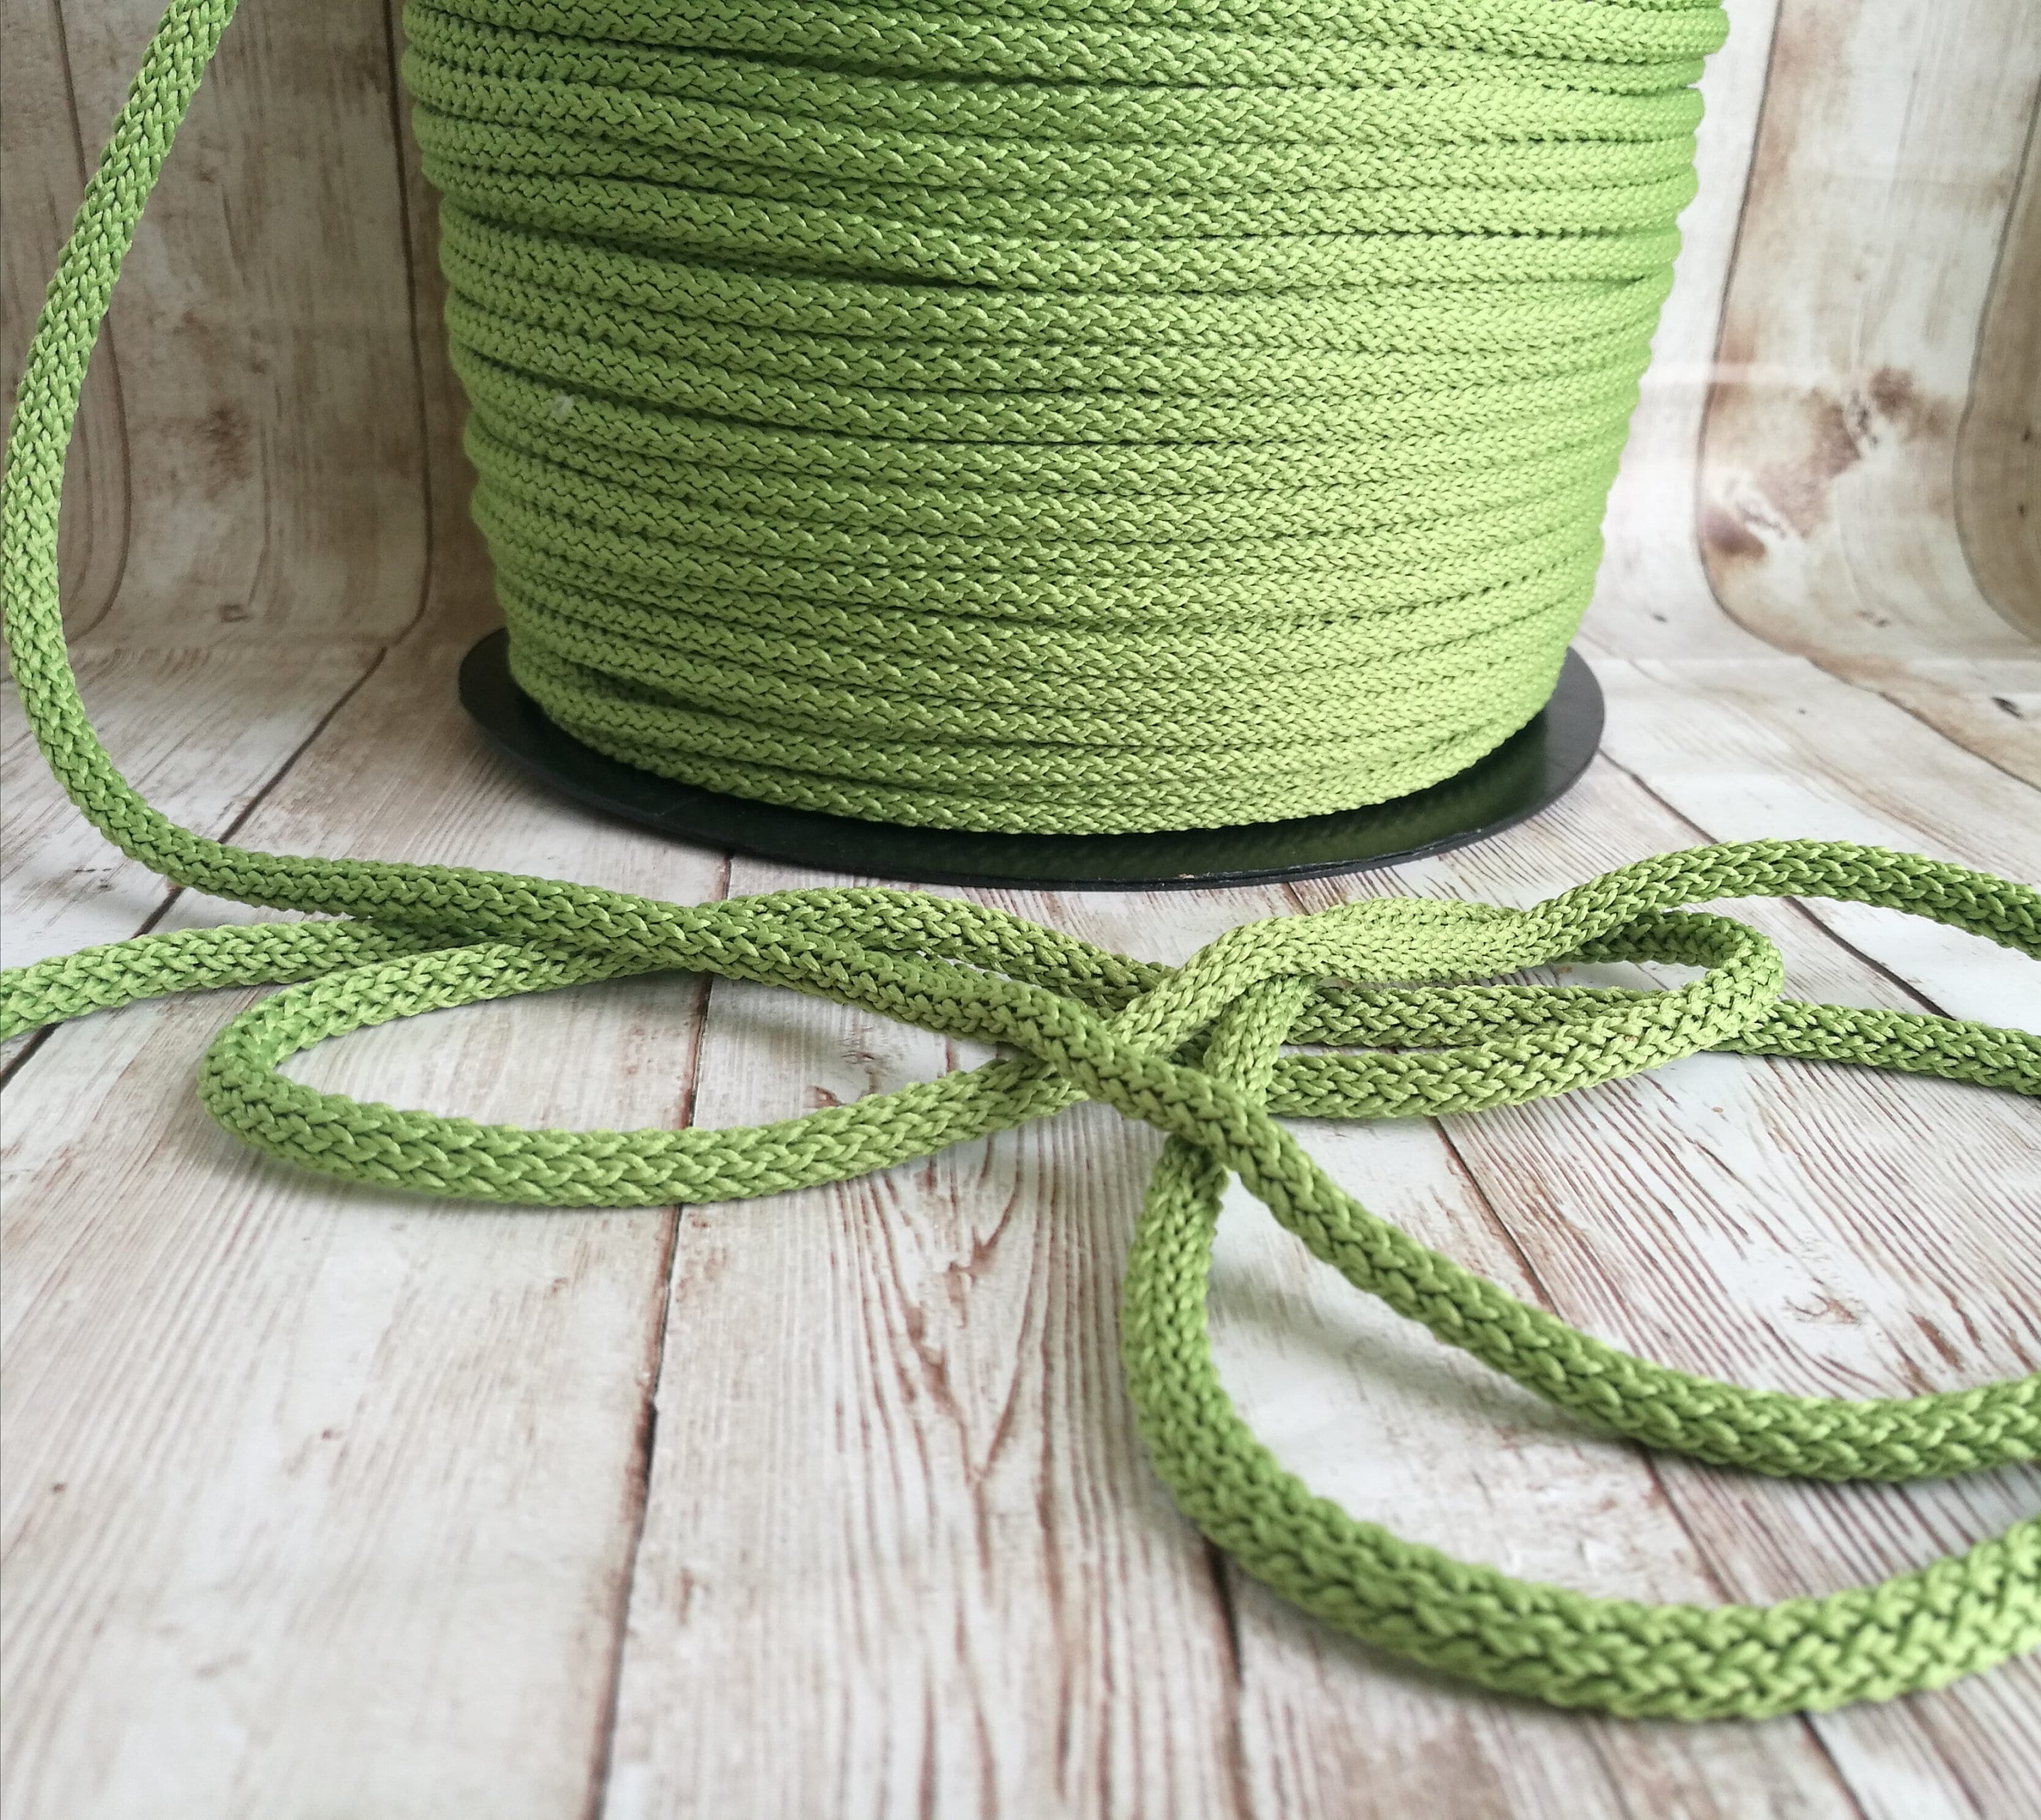 Mayitr Polyester Rope Polypropylene Cord Macrame Cord Crochet Bag